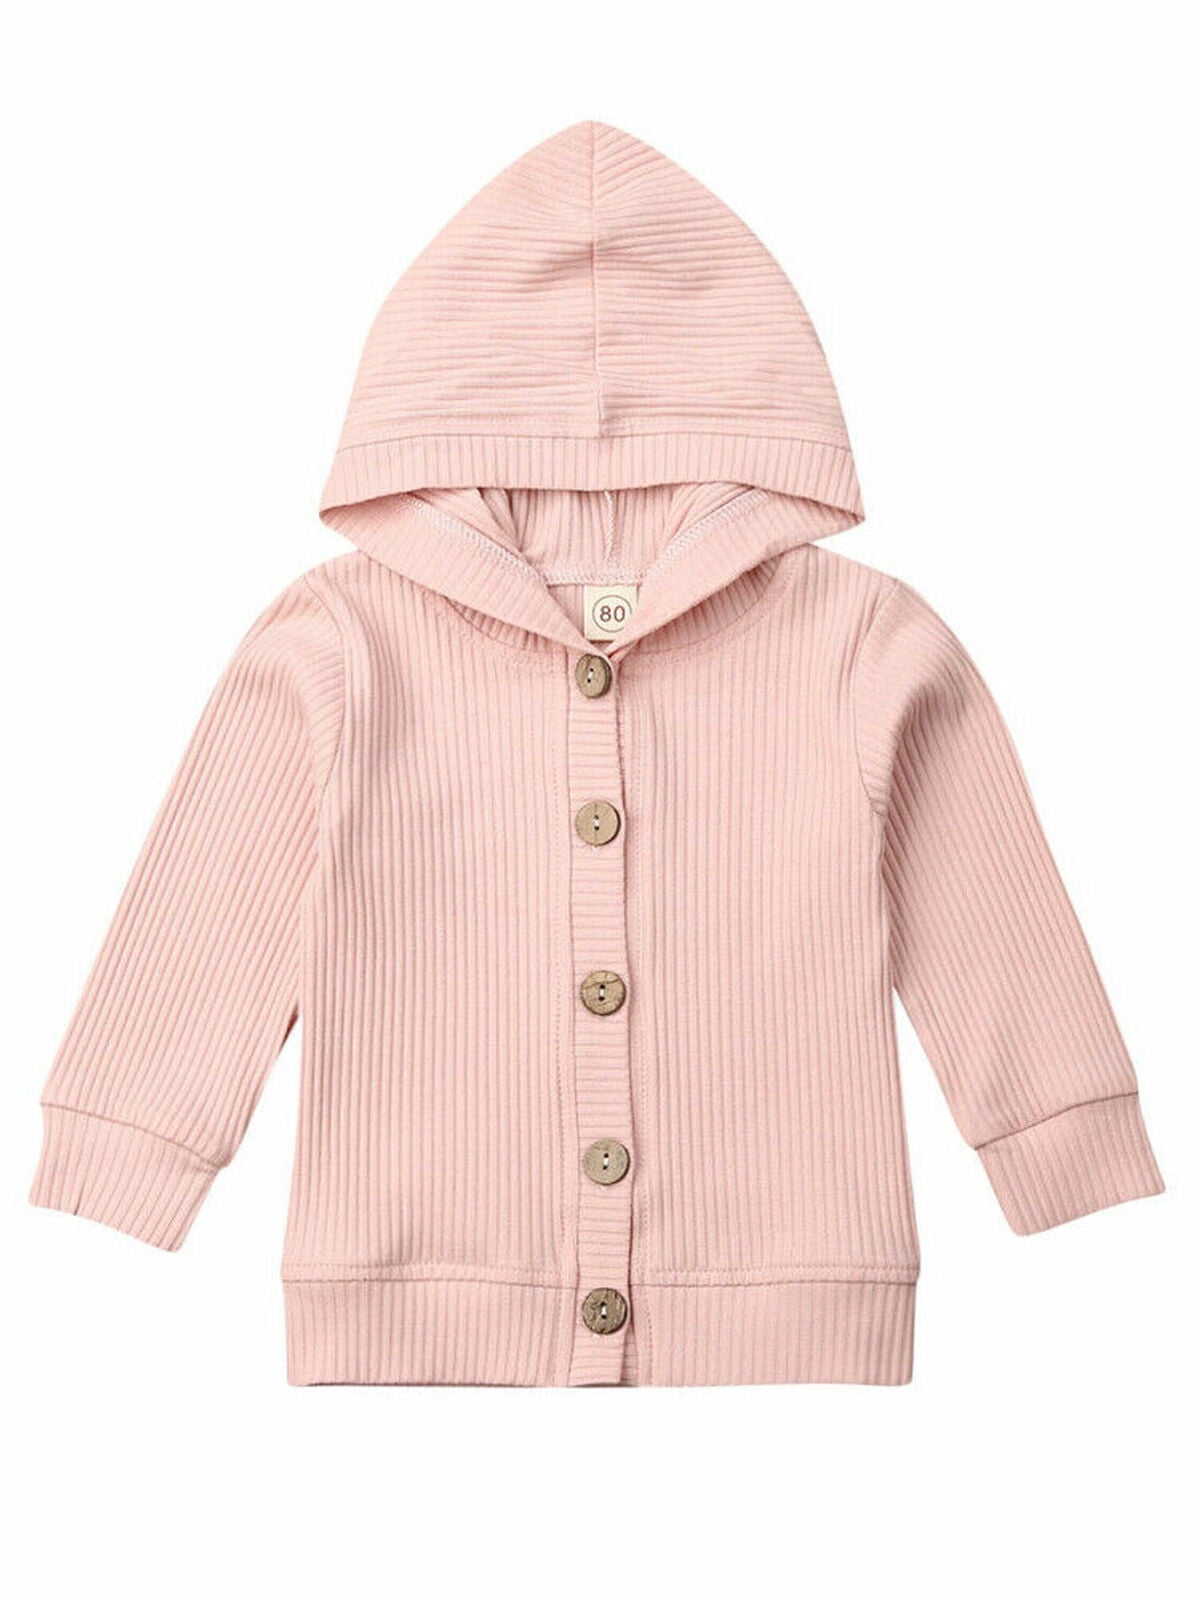 infant fall jacket